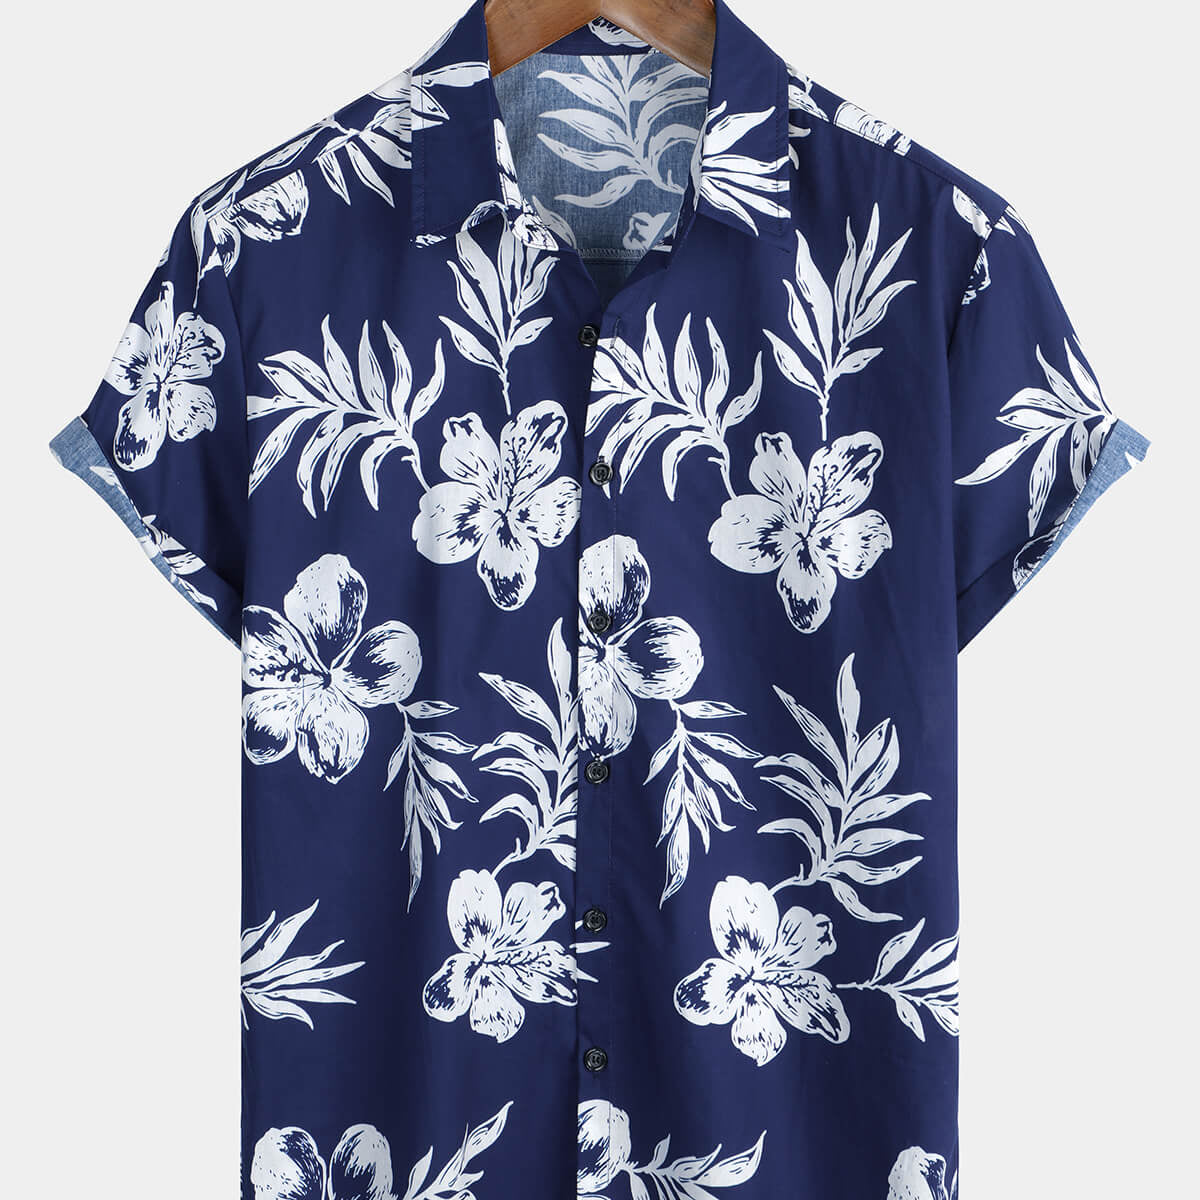 Men's Cool Tropical Short Sleeve Vintage Vacation 100% Cotton Shirt